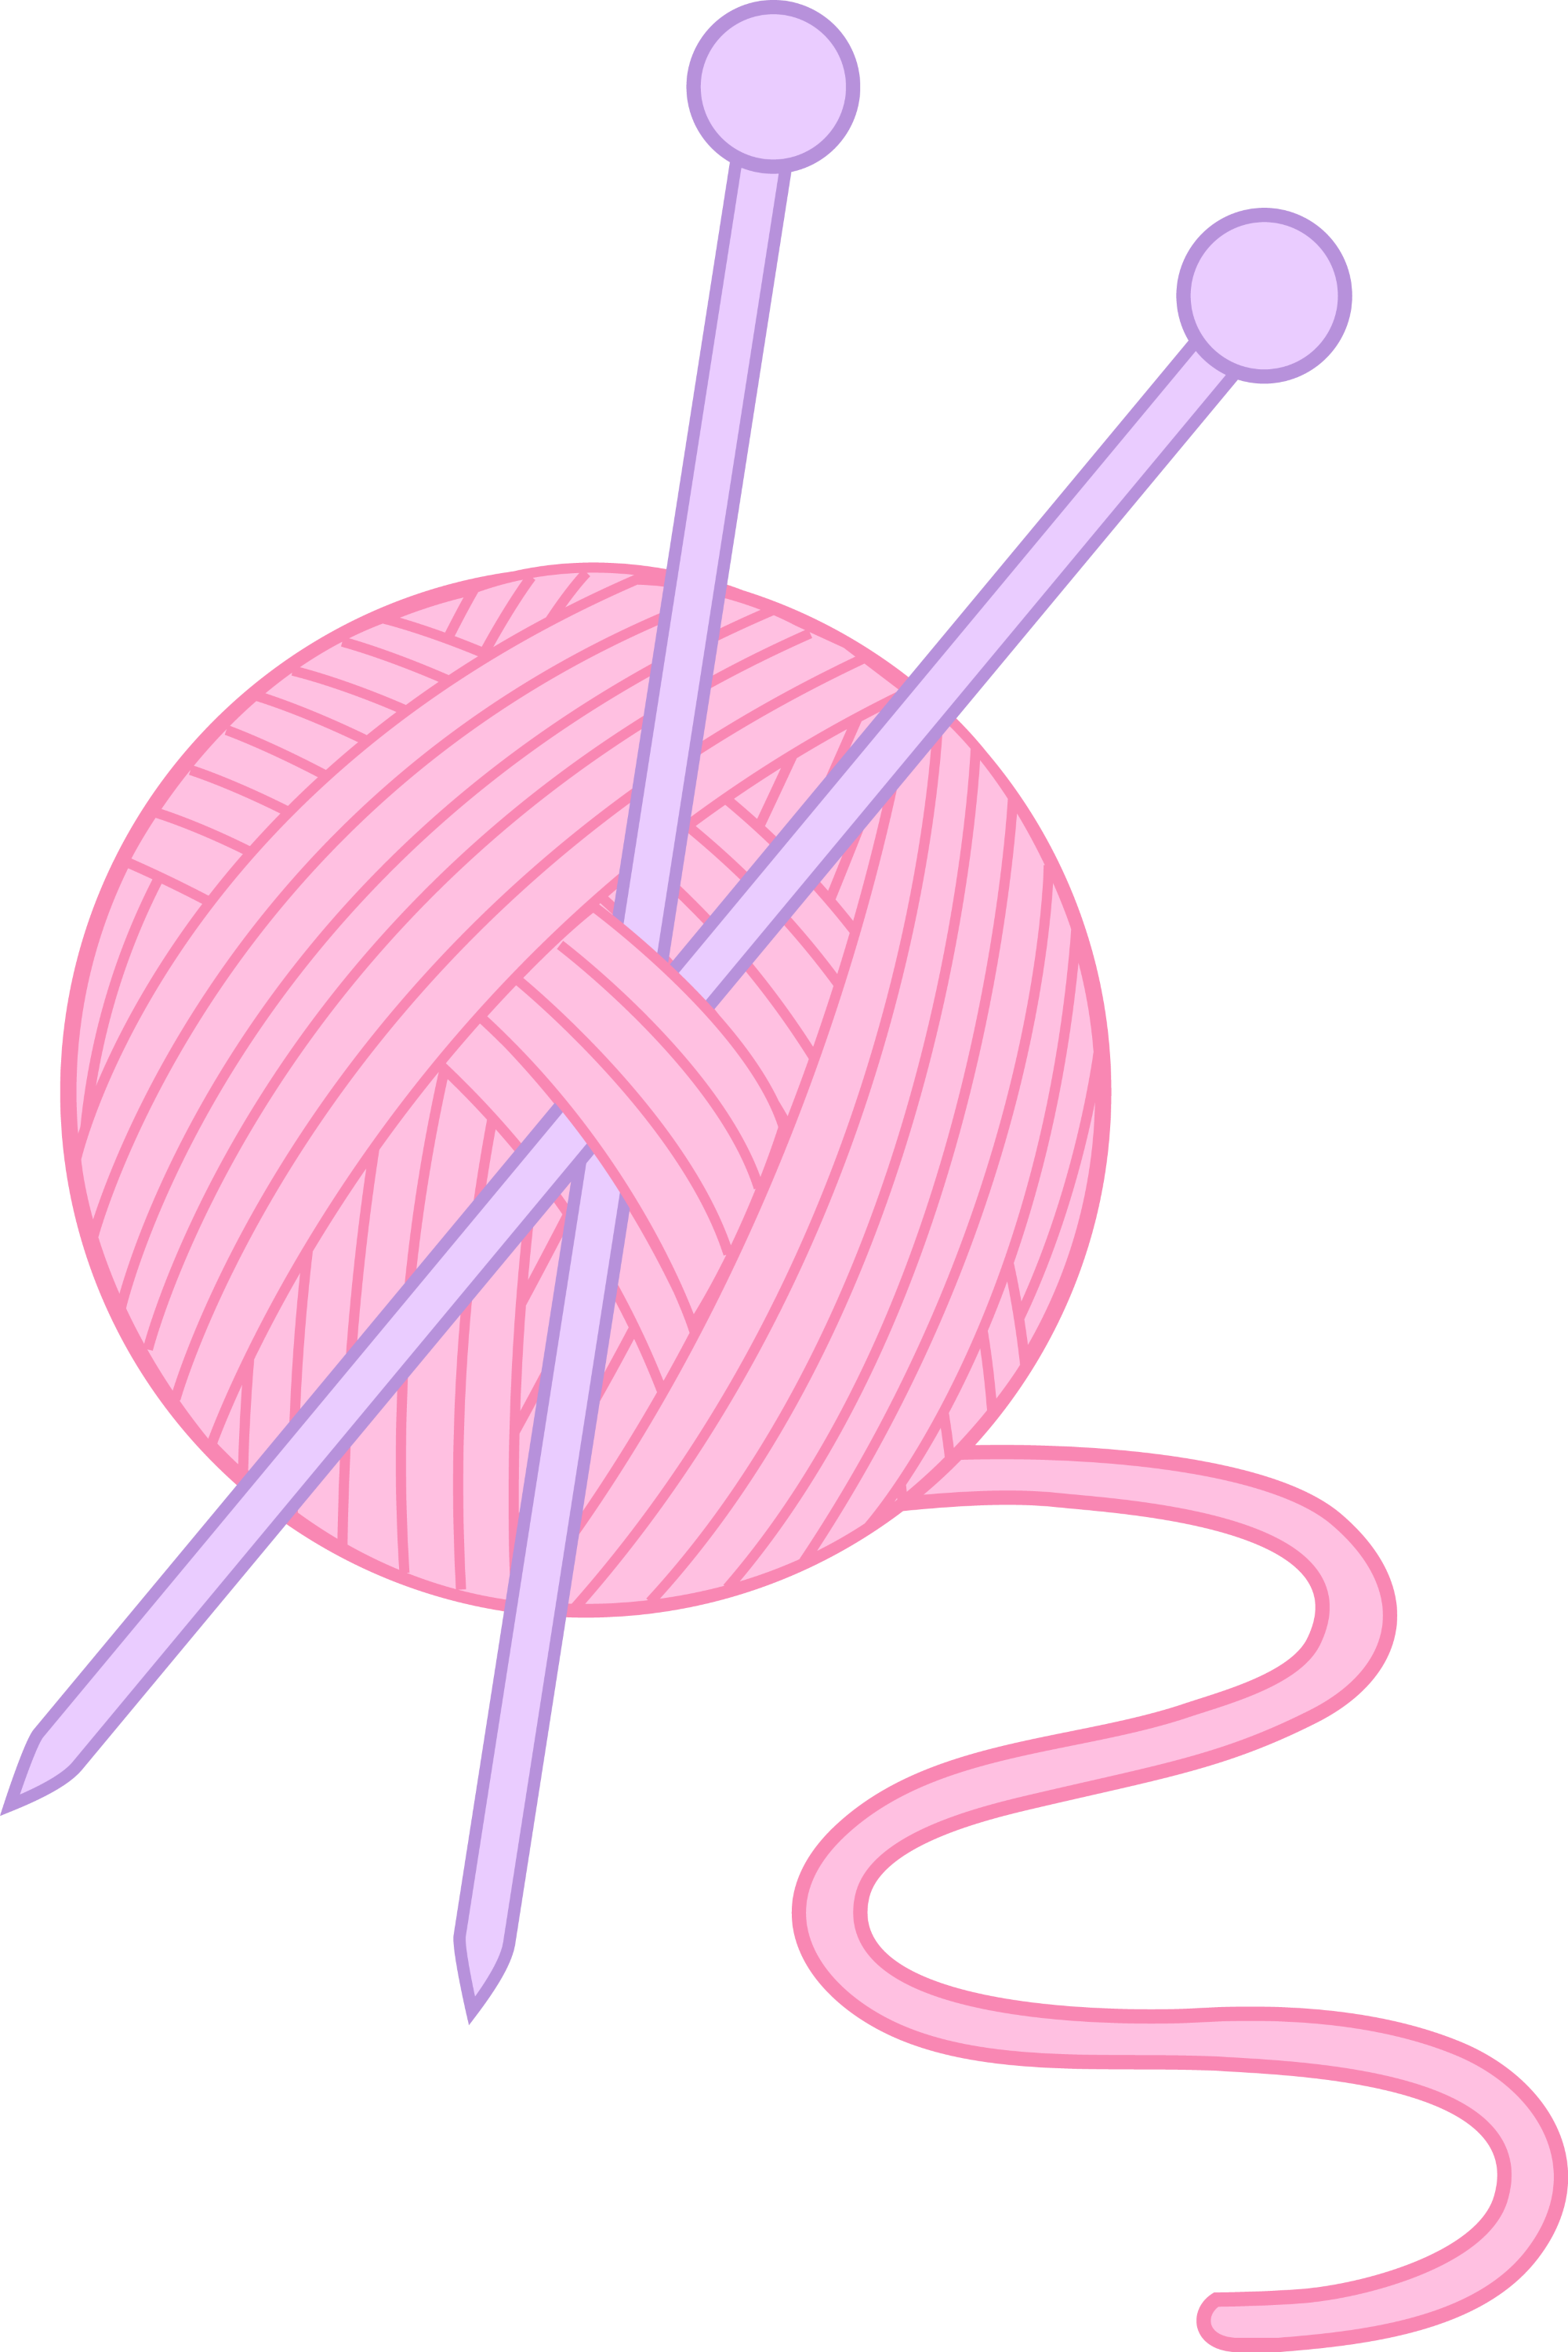 Pink Yarn and Knitting Needles - Free Clip Art